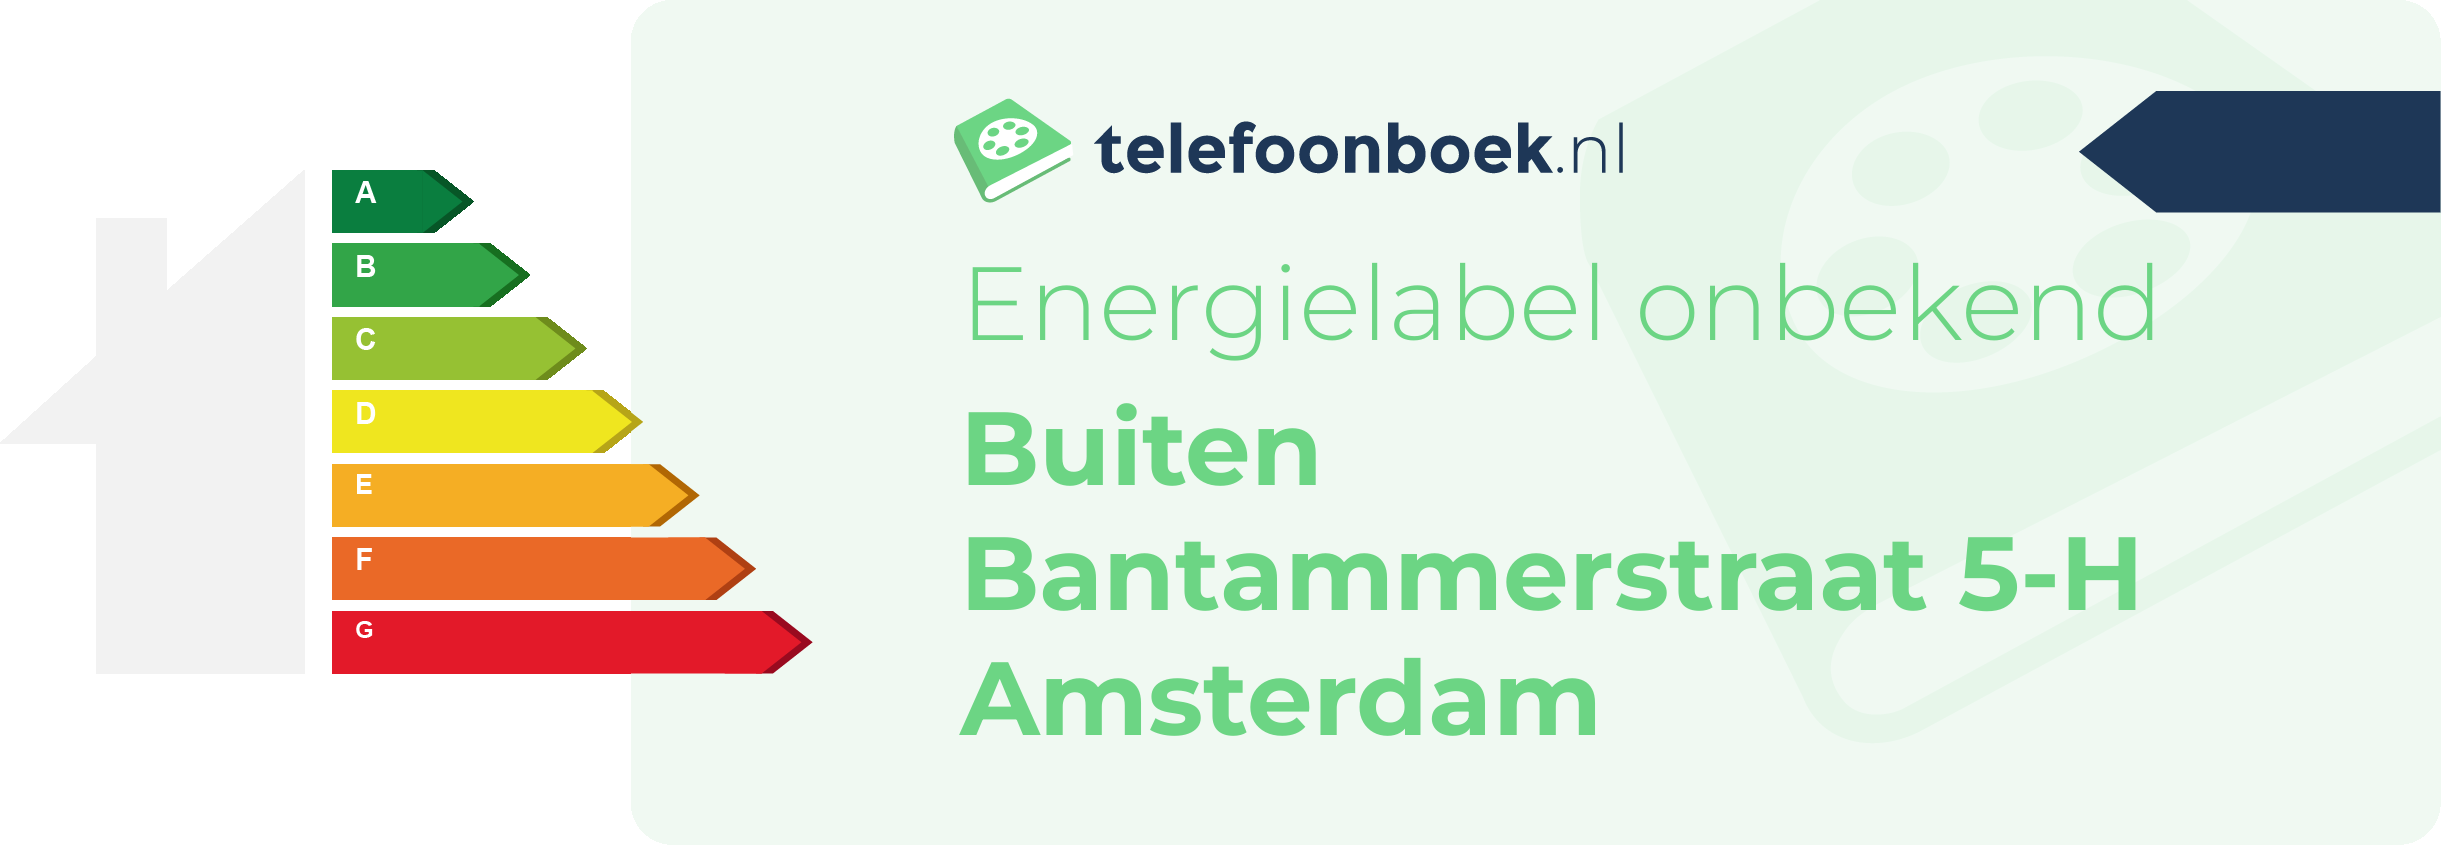 Energielabel Buiten Bantammerstraat 5-H Amsterdam